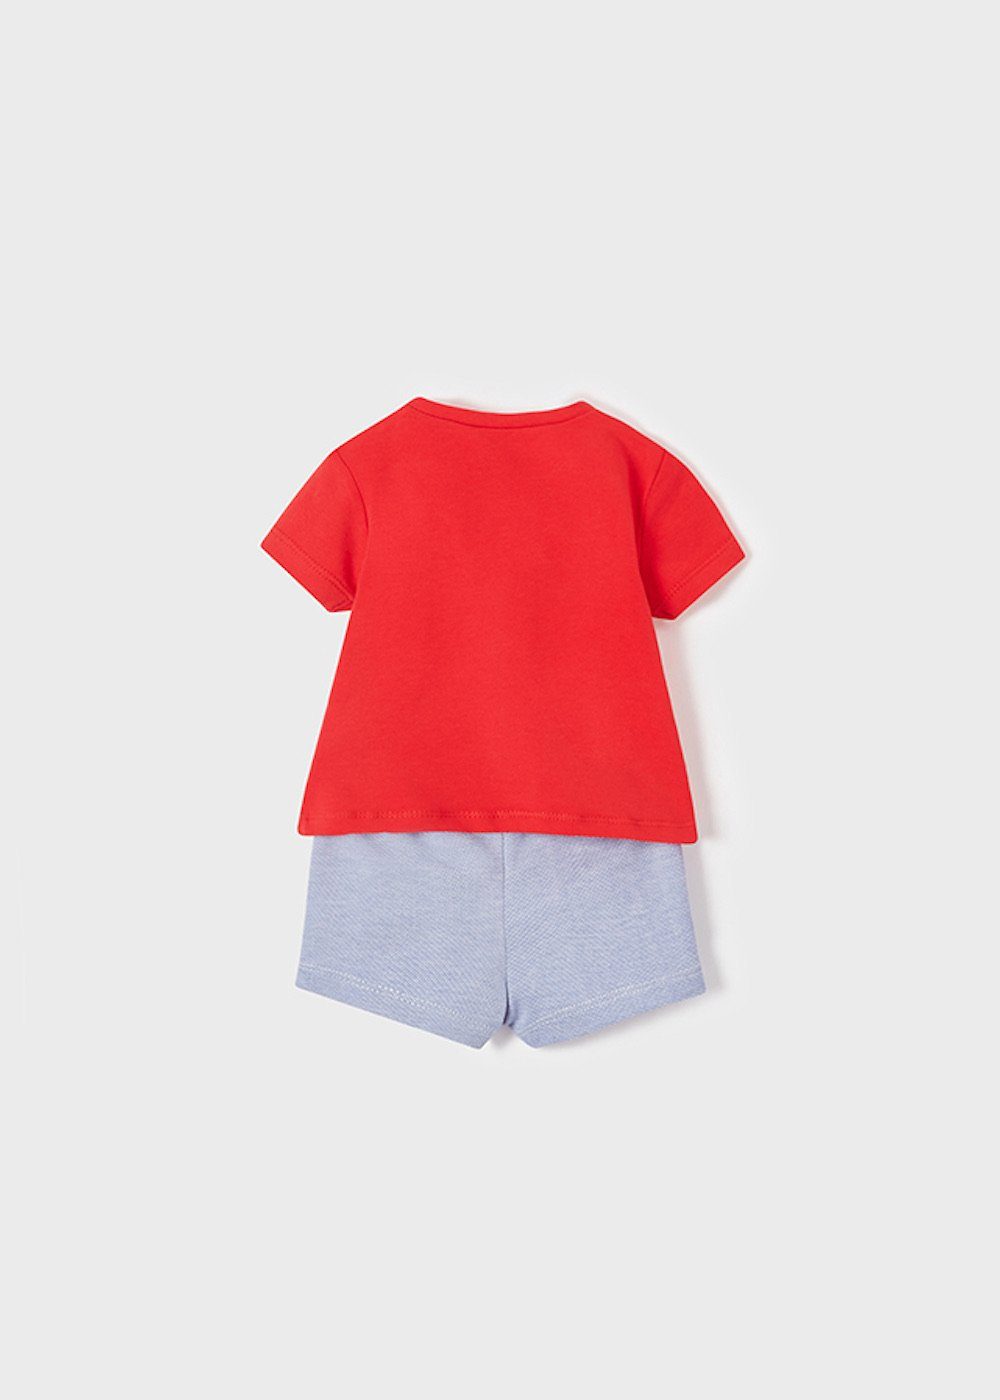 Motiv T-Shirts Shorts 4-teilig Red Shirt & Shorts Hund Set (165189) und Mayoral